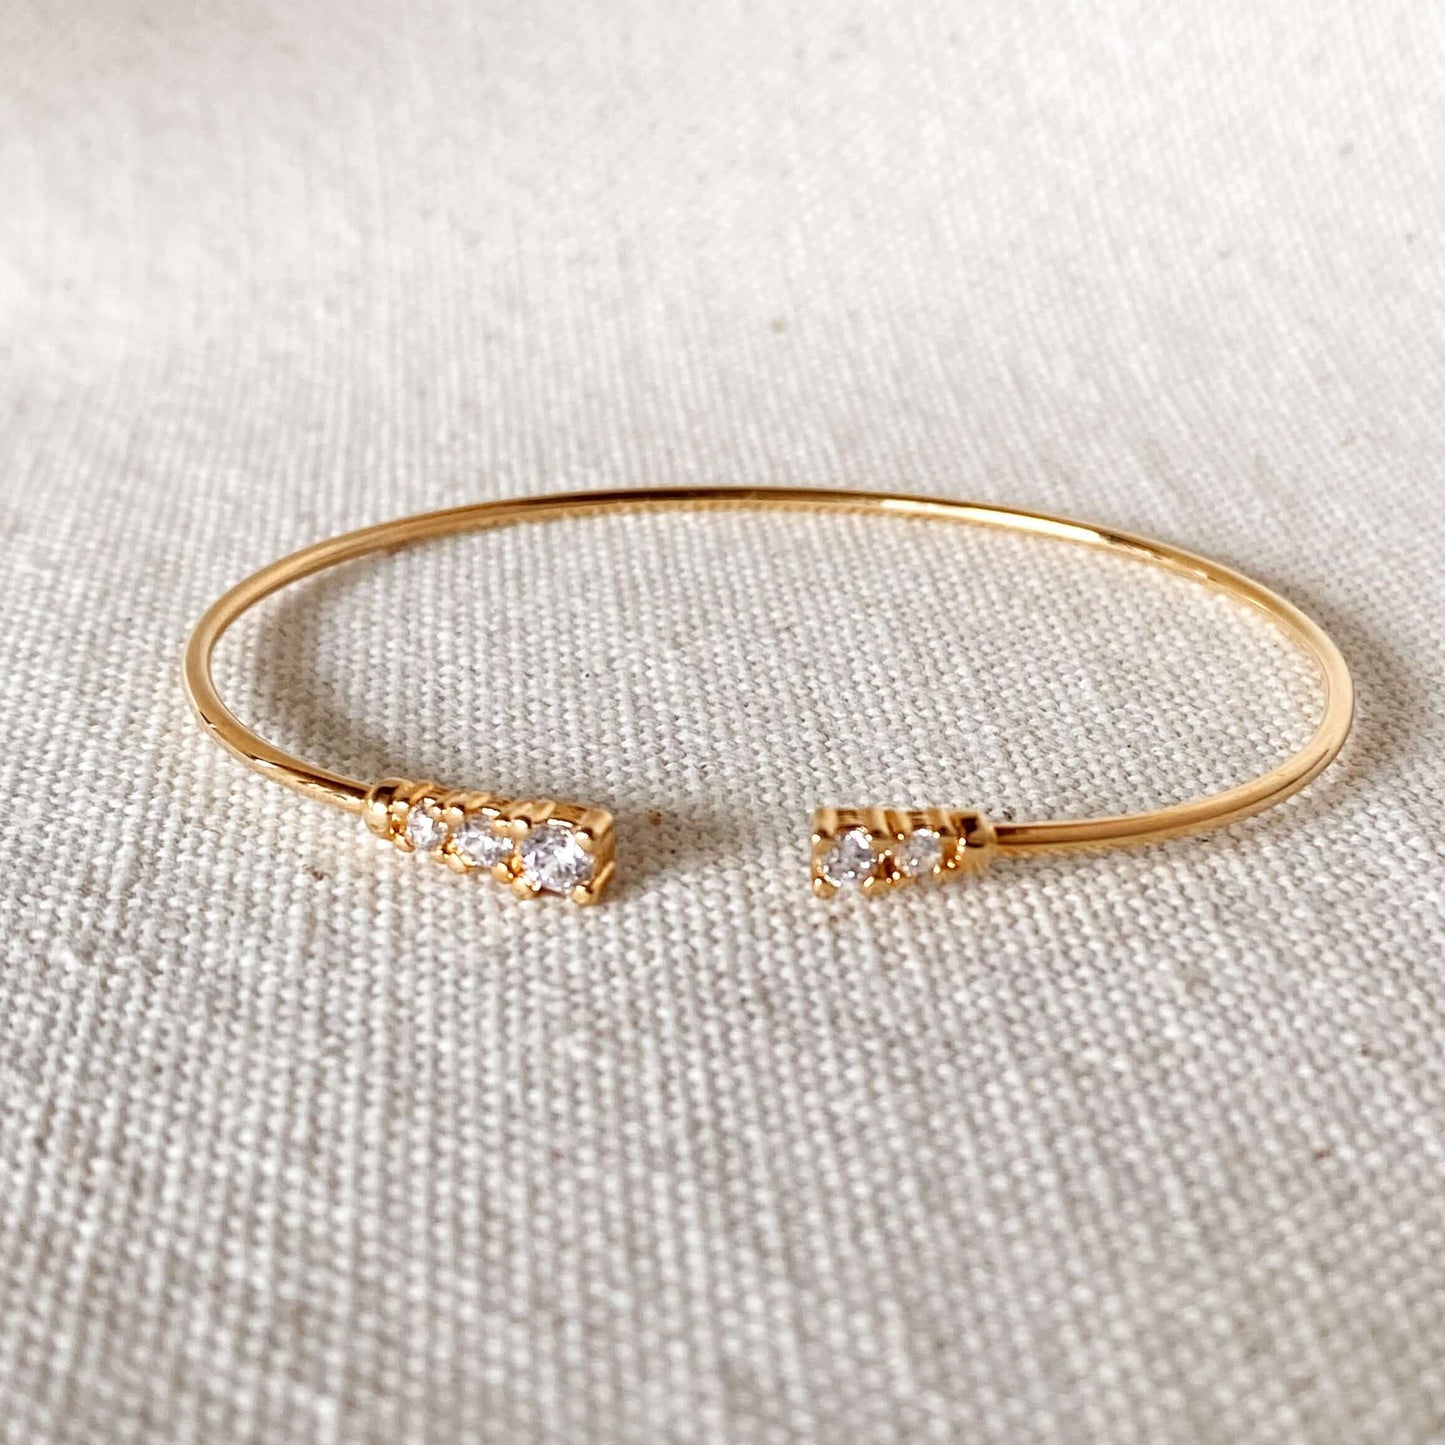 GoldFi Dainty 18k Gold Filled Cuff Bracelet with Cubic Zirconia Stones